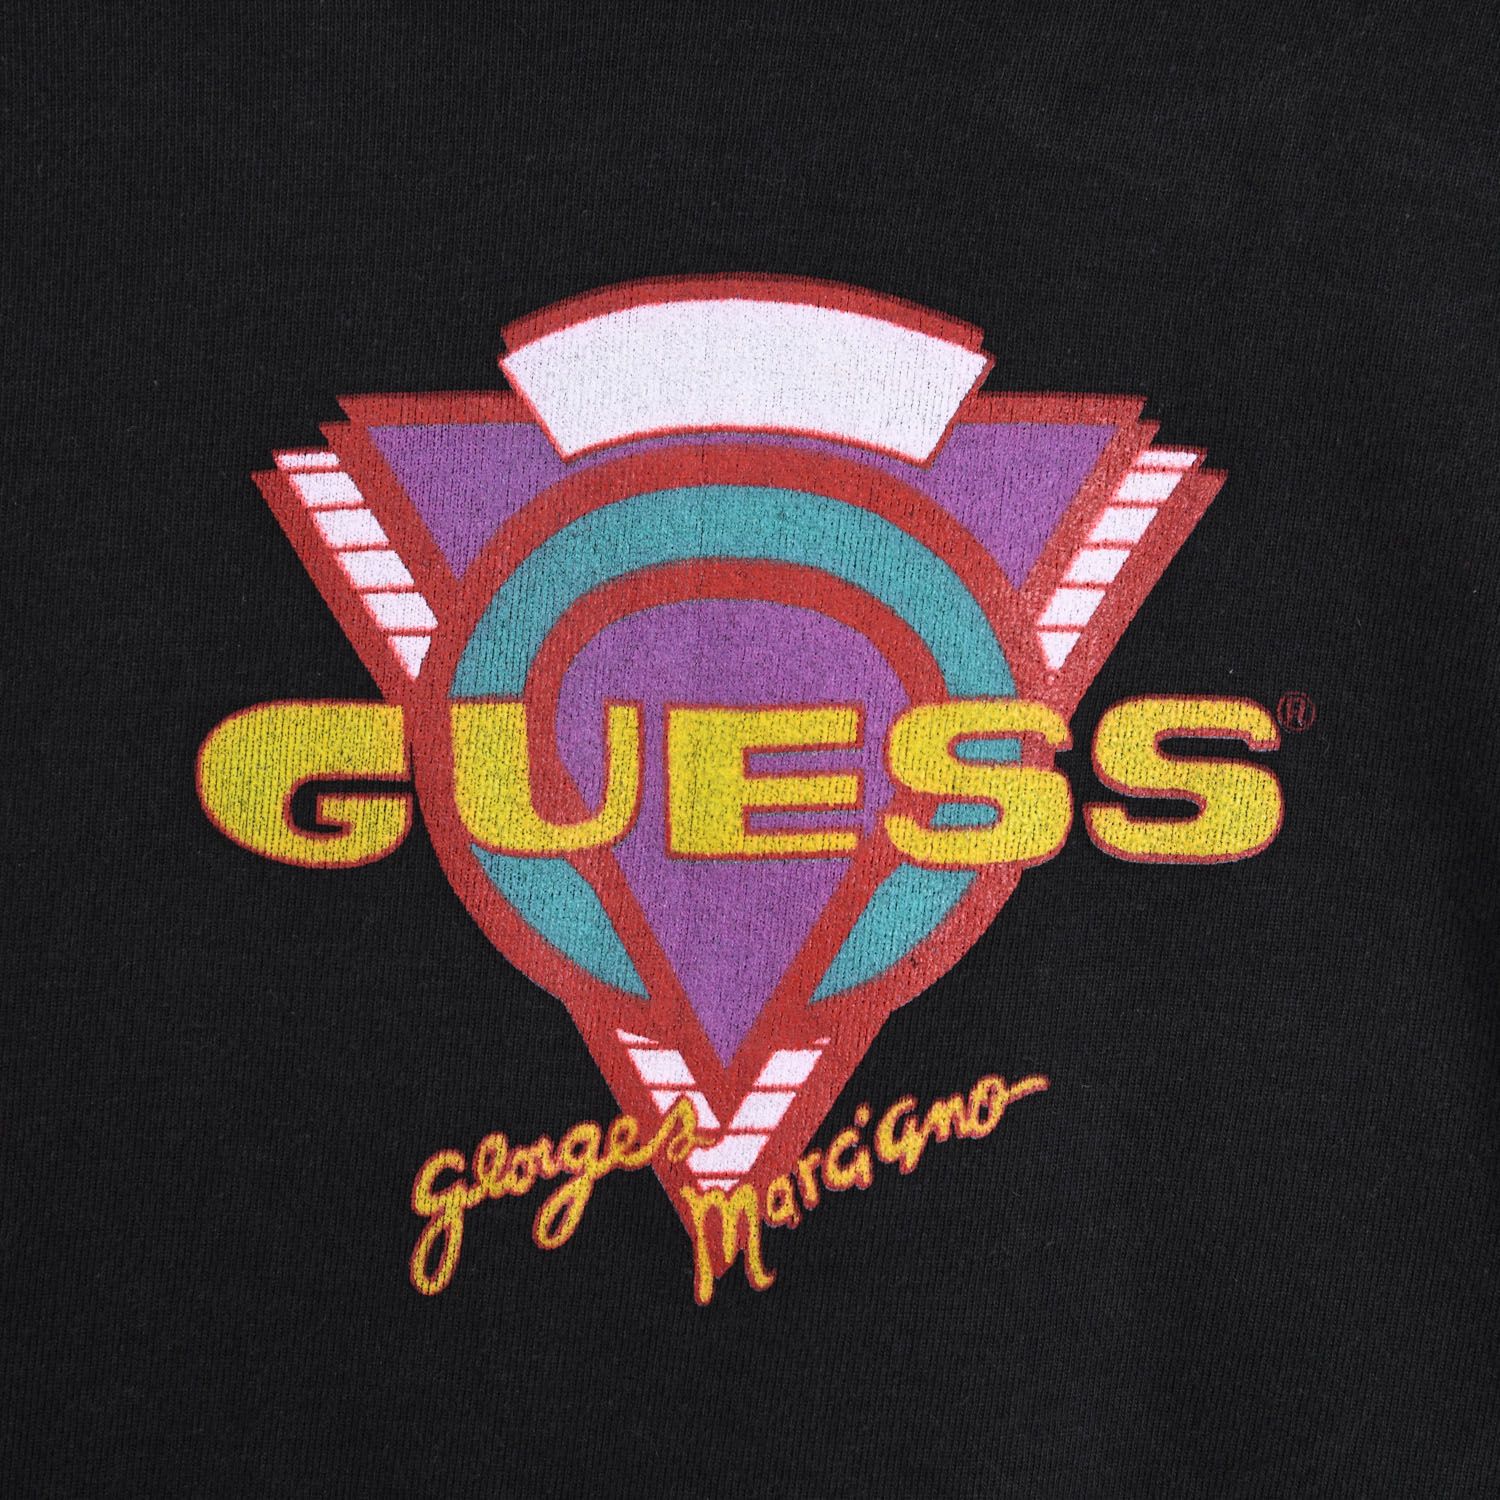 Guess 1980s Sweatshirt